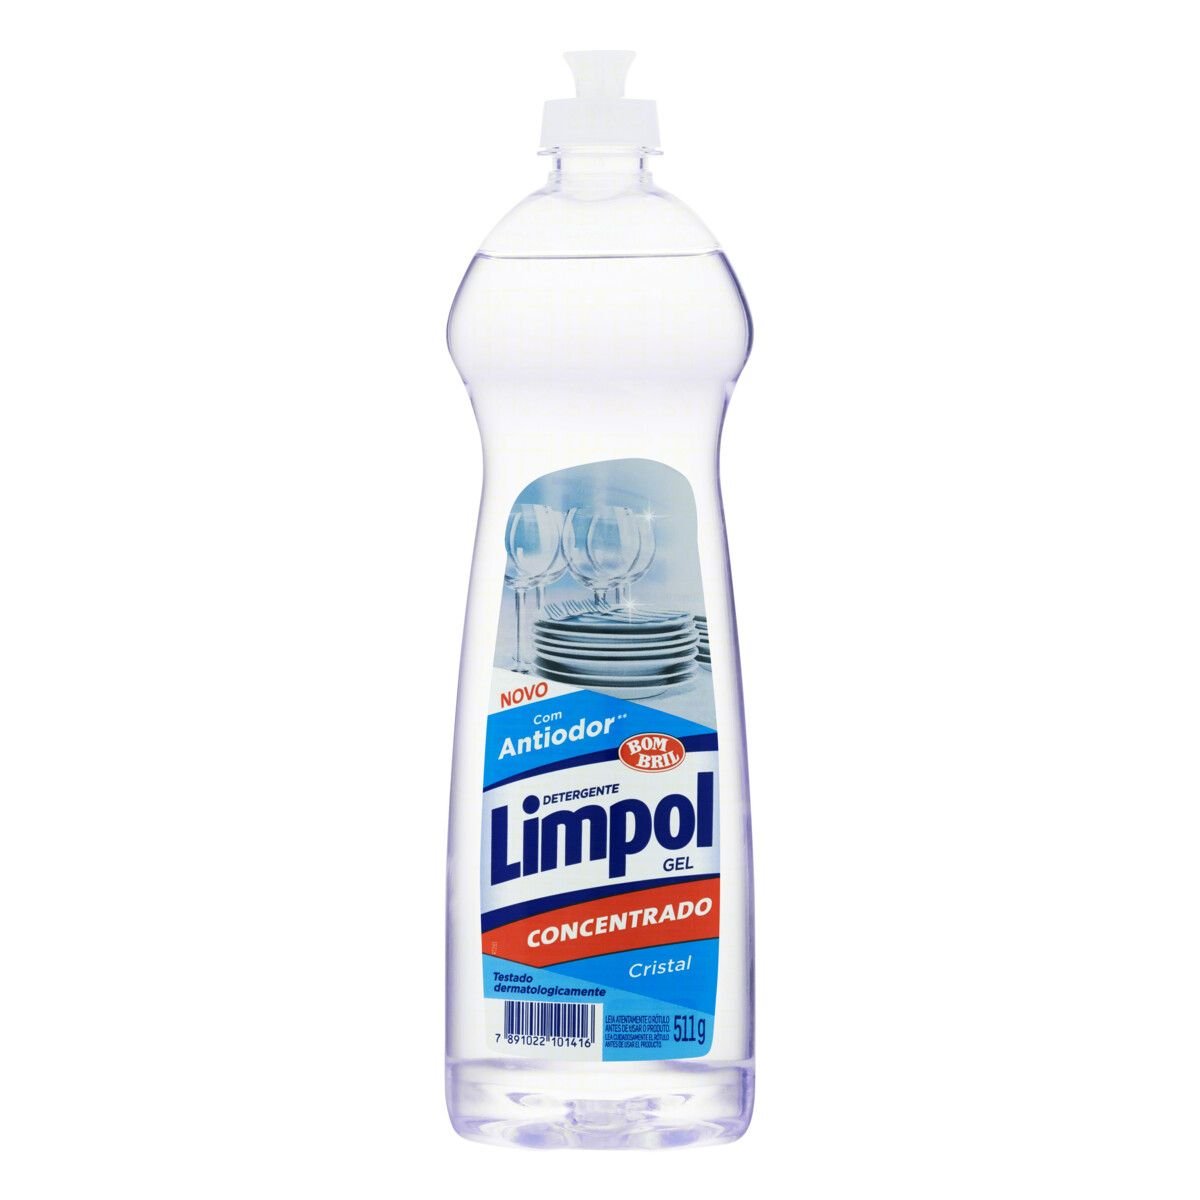 Detergente Gel Concentrado Limpol Cristal 511g